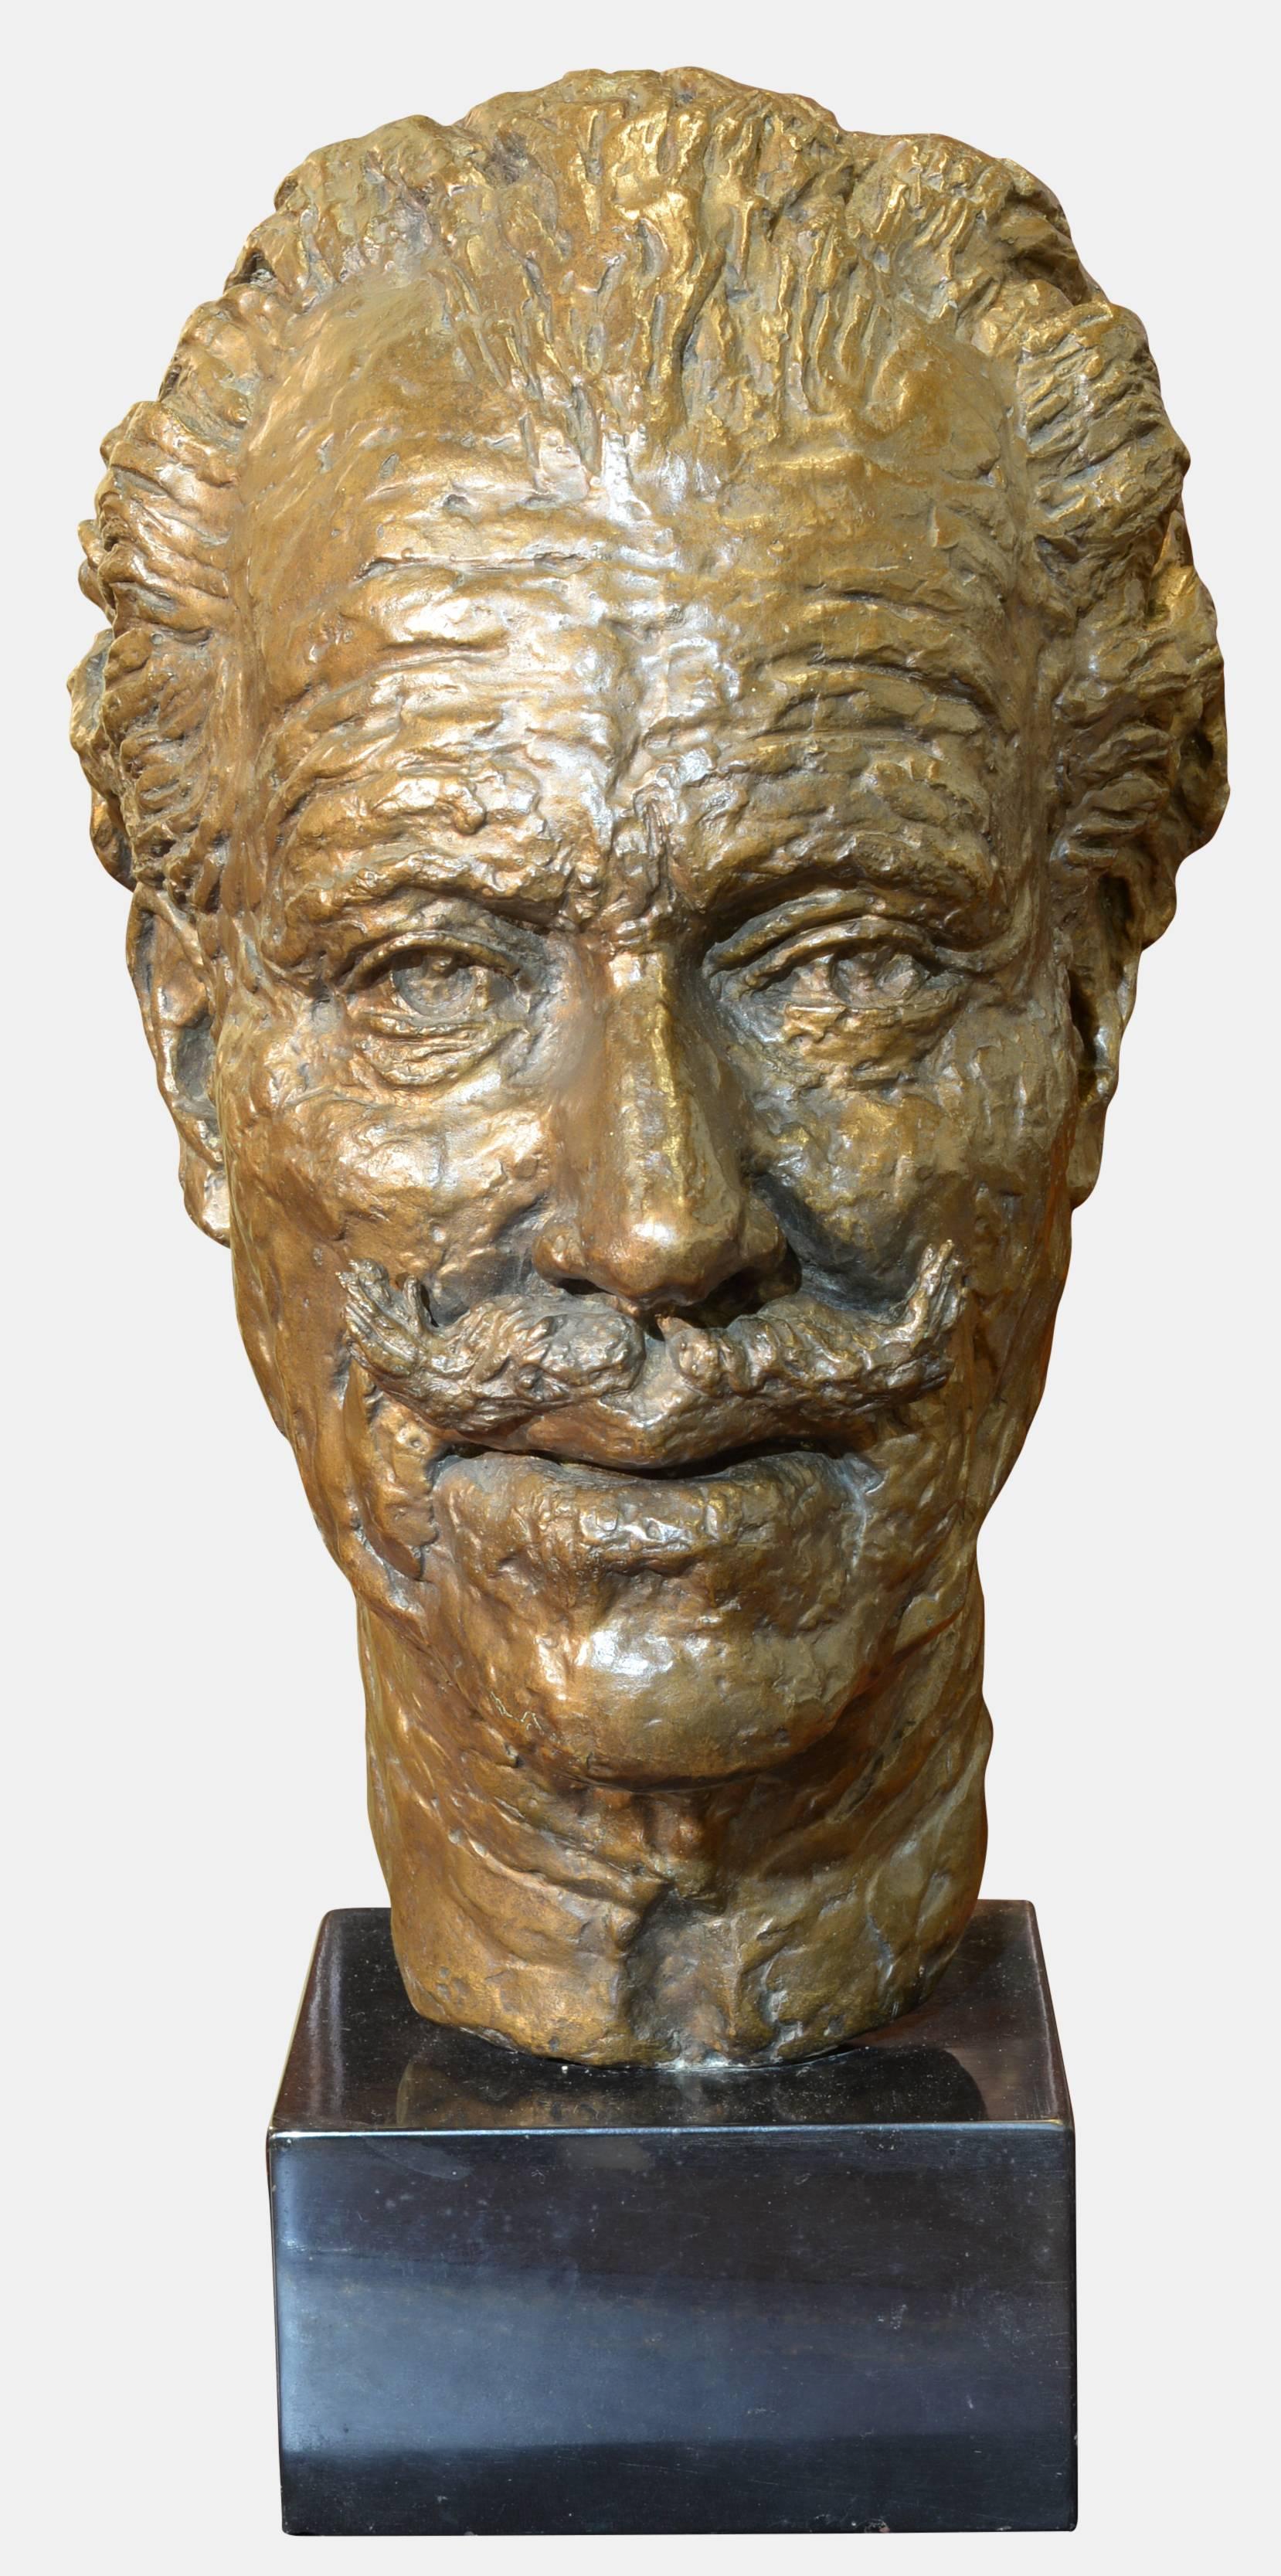 A bronze sculpture head of Sir Mortimer Wheeler by Philip Knight (Sussex ceramicist and art teacher). Possibly an R.A Exhibit, circa 1962.

35cm (13.8") - High
23cm (9.1") - Wide
28cm (11.0") - Deep.